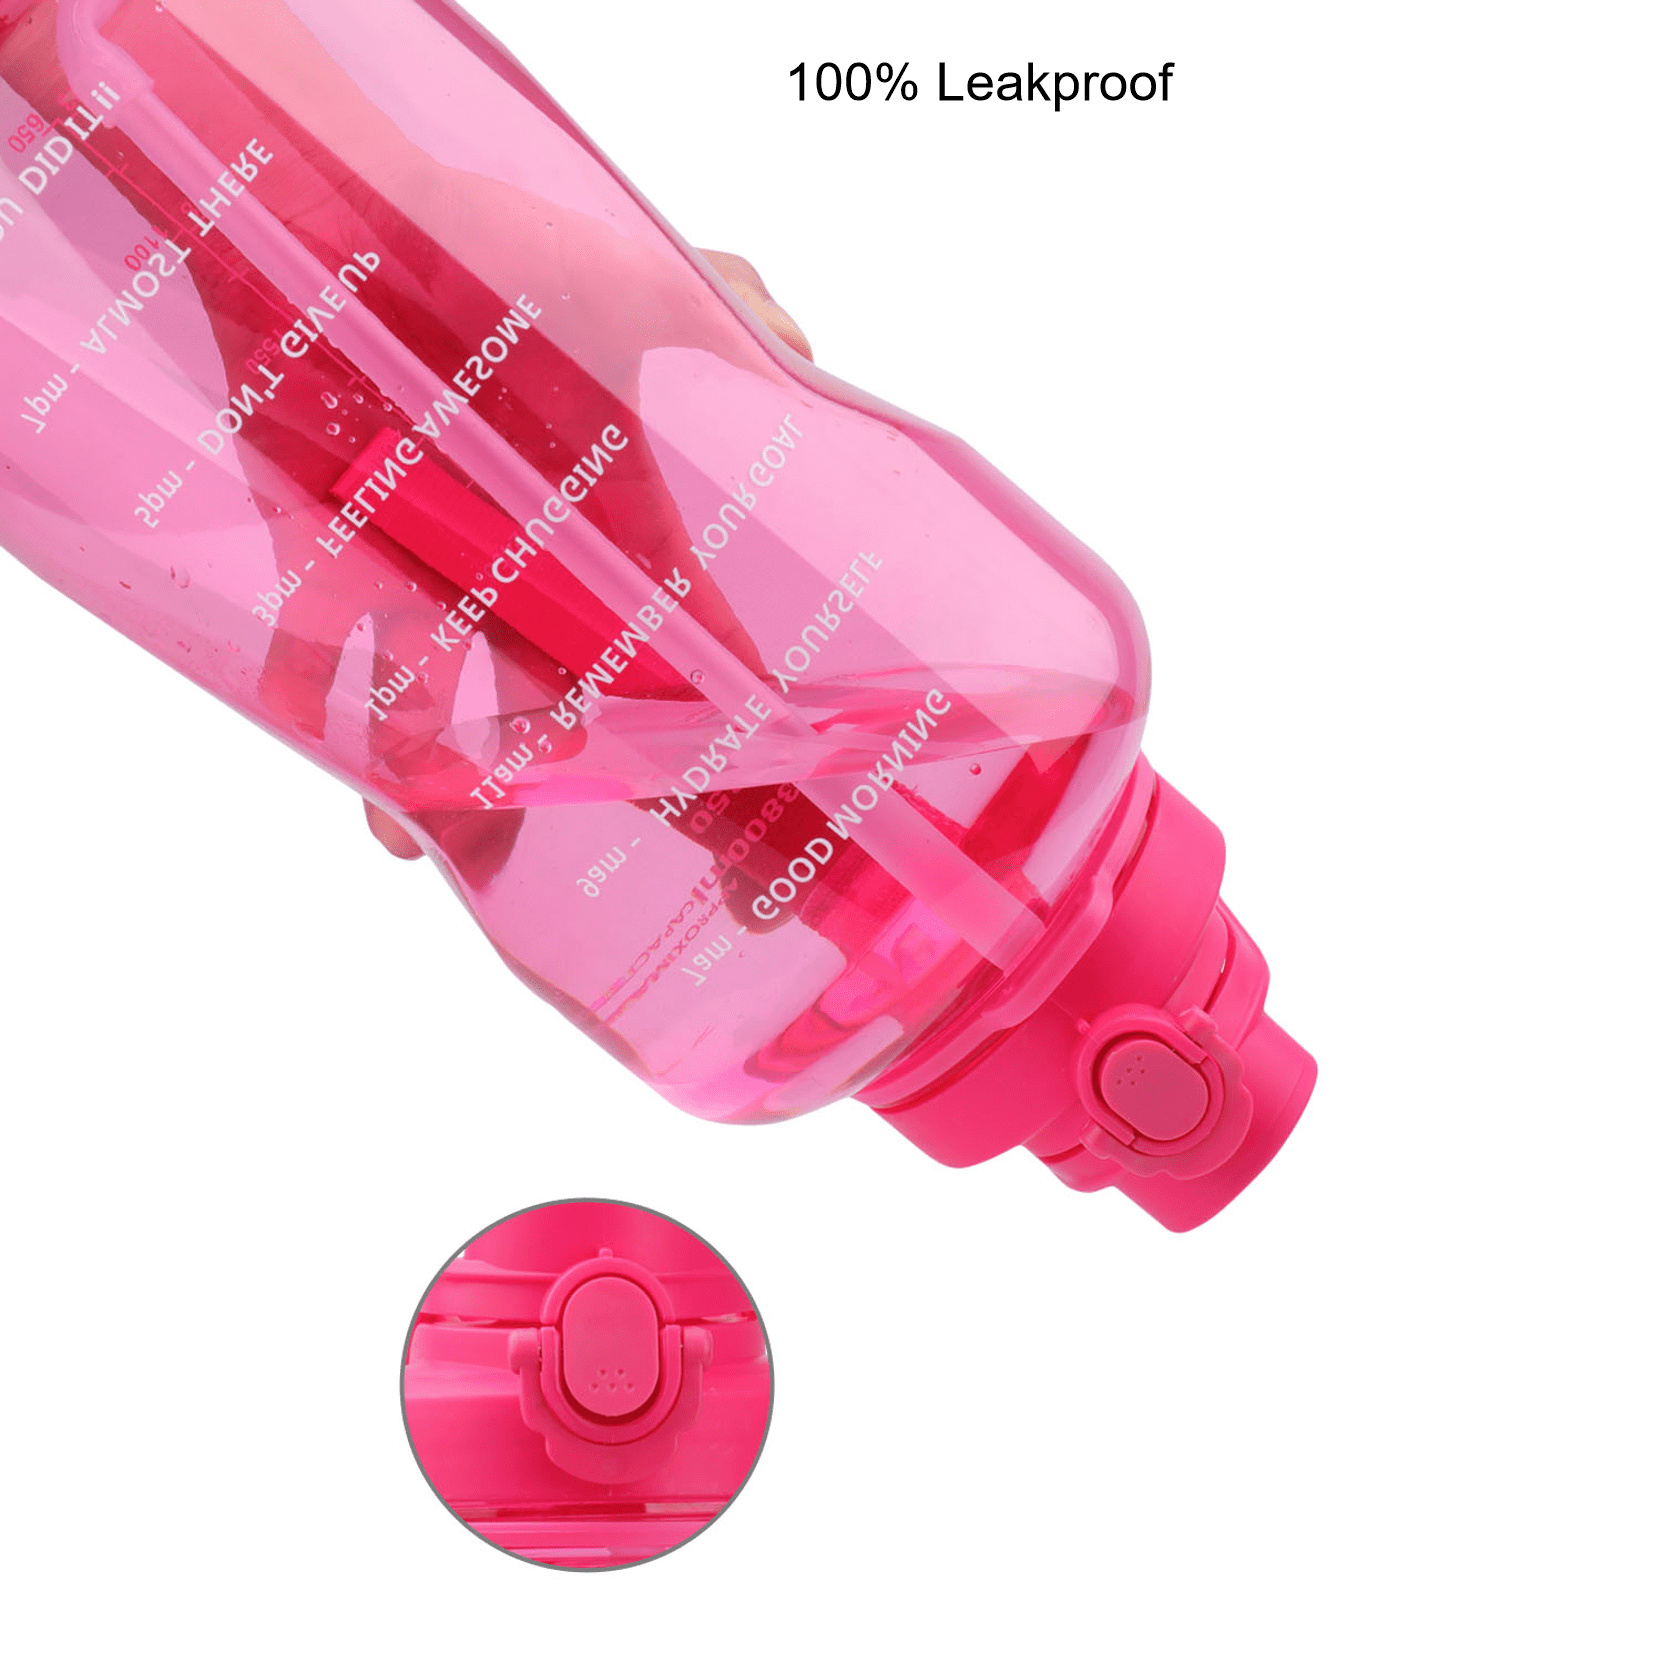 Tri-Coastal Design Work Hard Stay Humble BPA Free Travel Water Bottle W Storage Holder, Pink